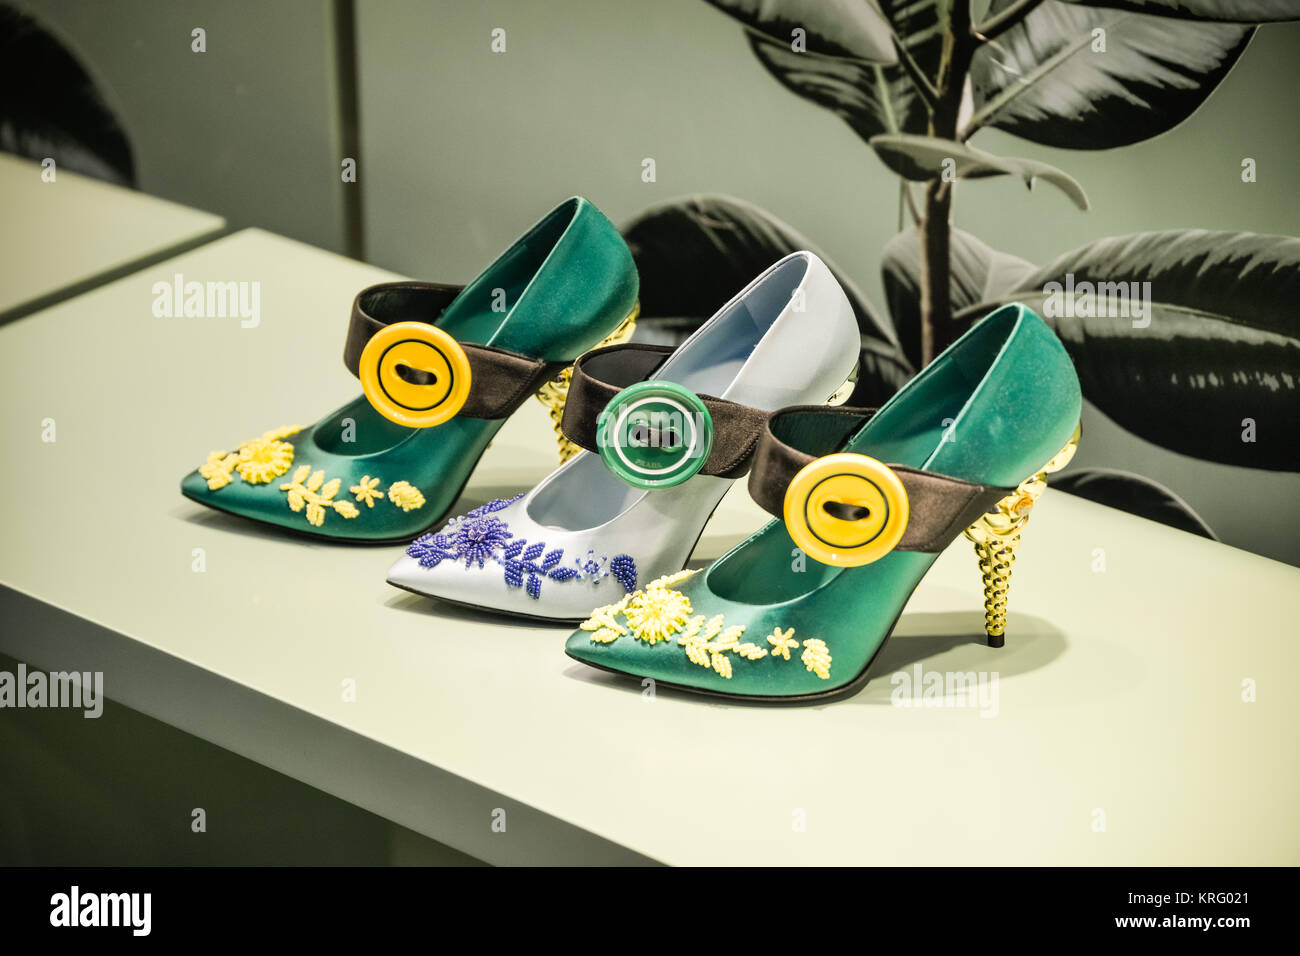 Prada Schuhe Marke Fenster Store in via Condotti Rom Italien, shopping  Luxusmode made in Italien Stockfotografie - Alamy